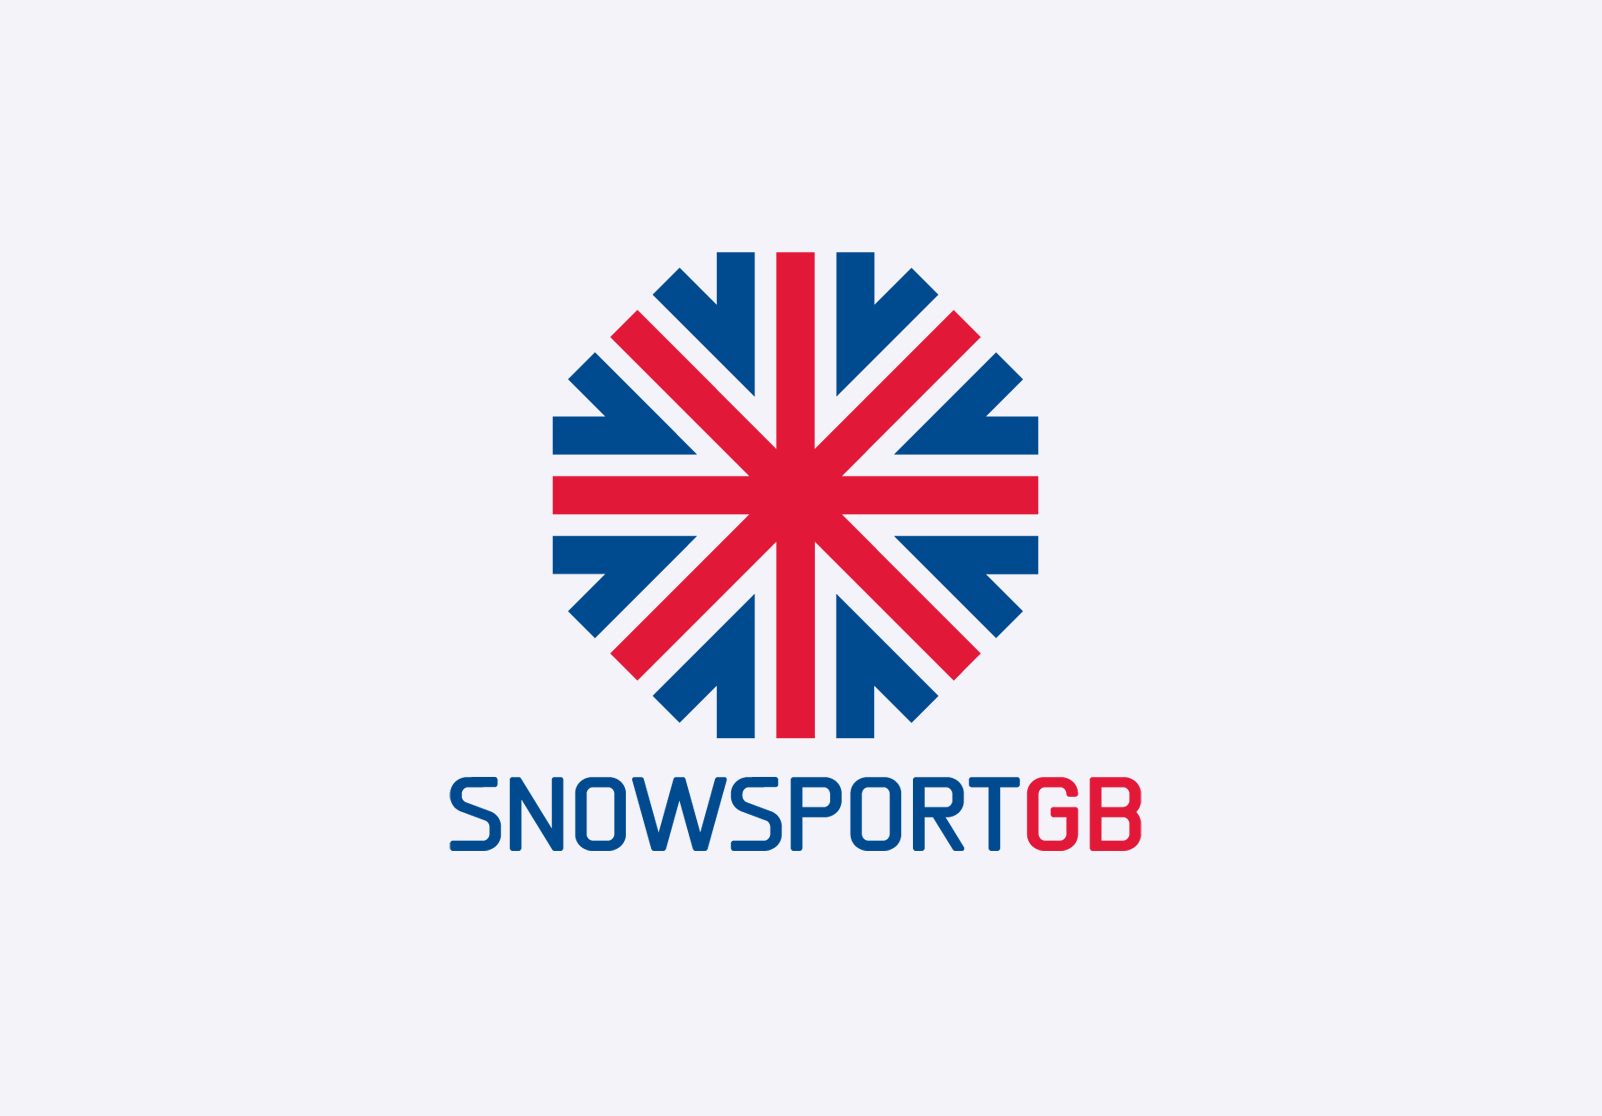 Snowsport GB Snow Ski Snowboarding Rudaizky sport winter snow logo UK athletics